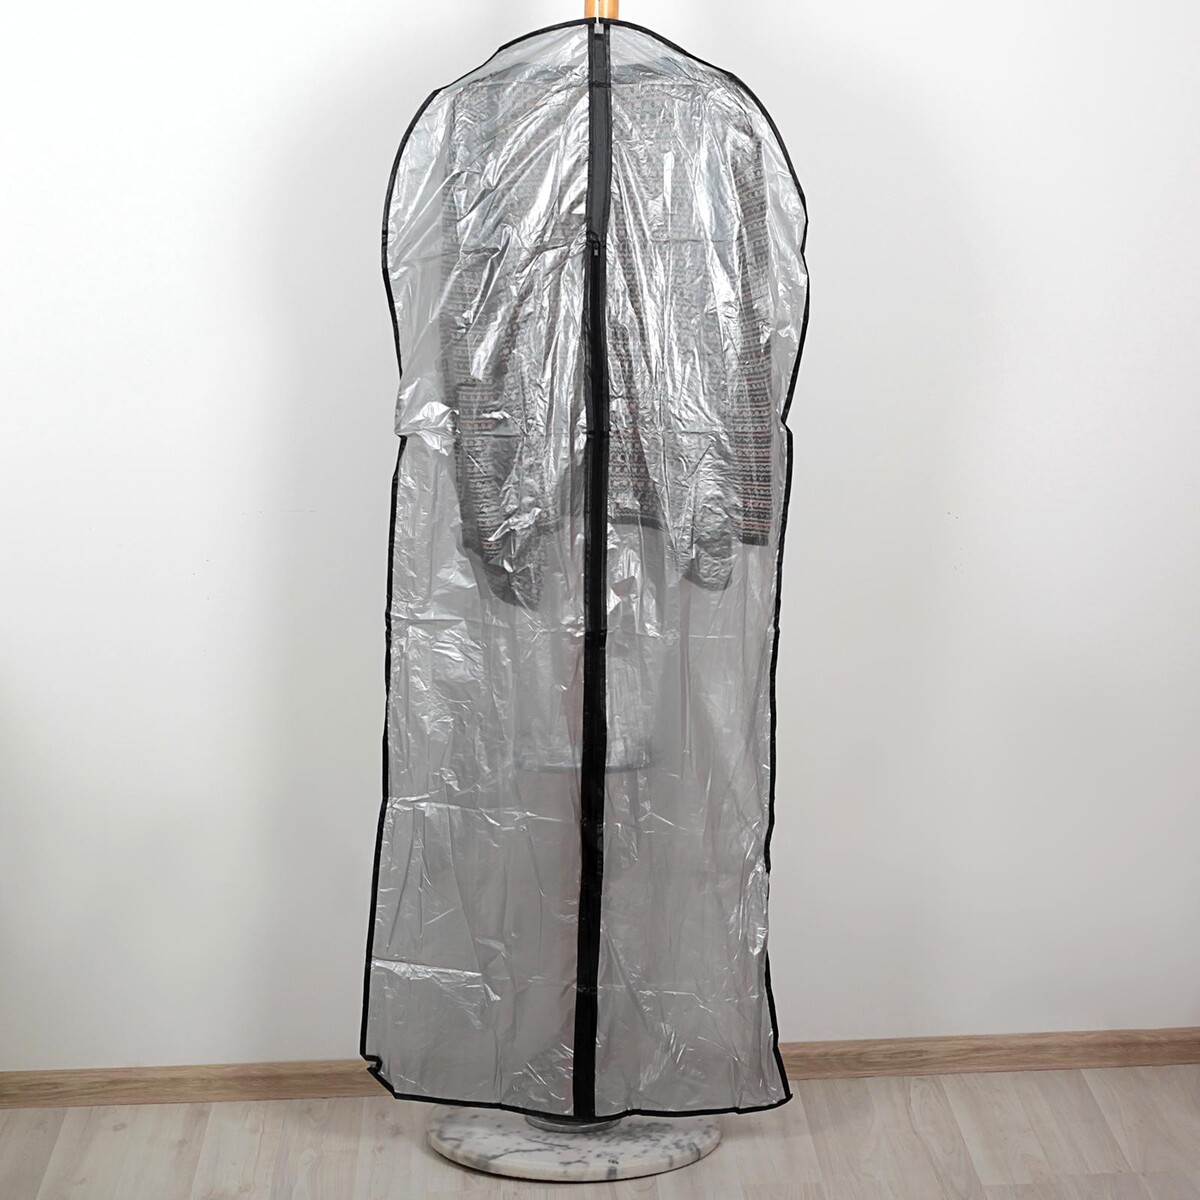 Чехол для одежды доляна, 60×137 см, peva, цвет серый, прозрачный чехол для одежды доляна 60×137 см peva серый прозрачный